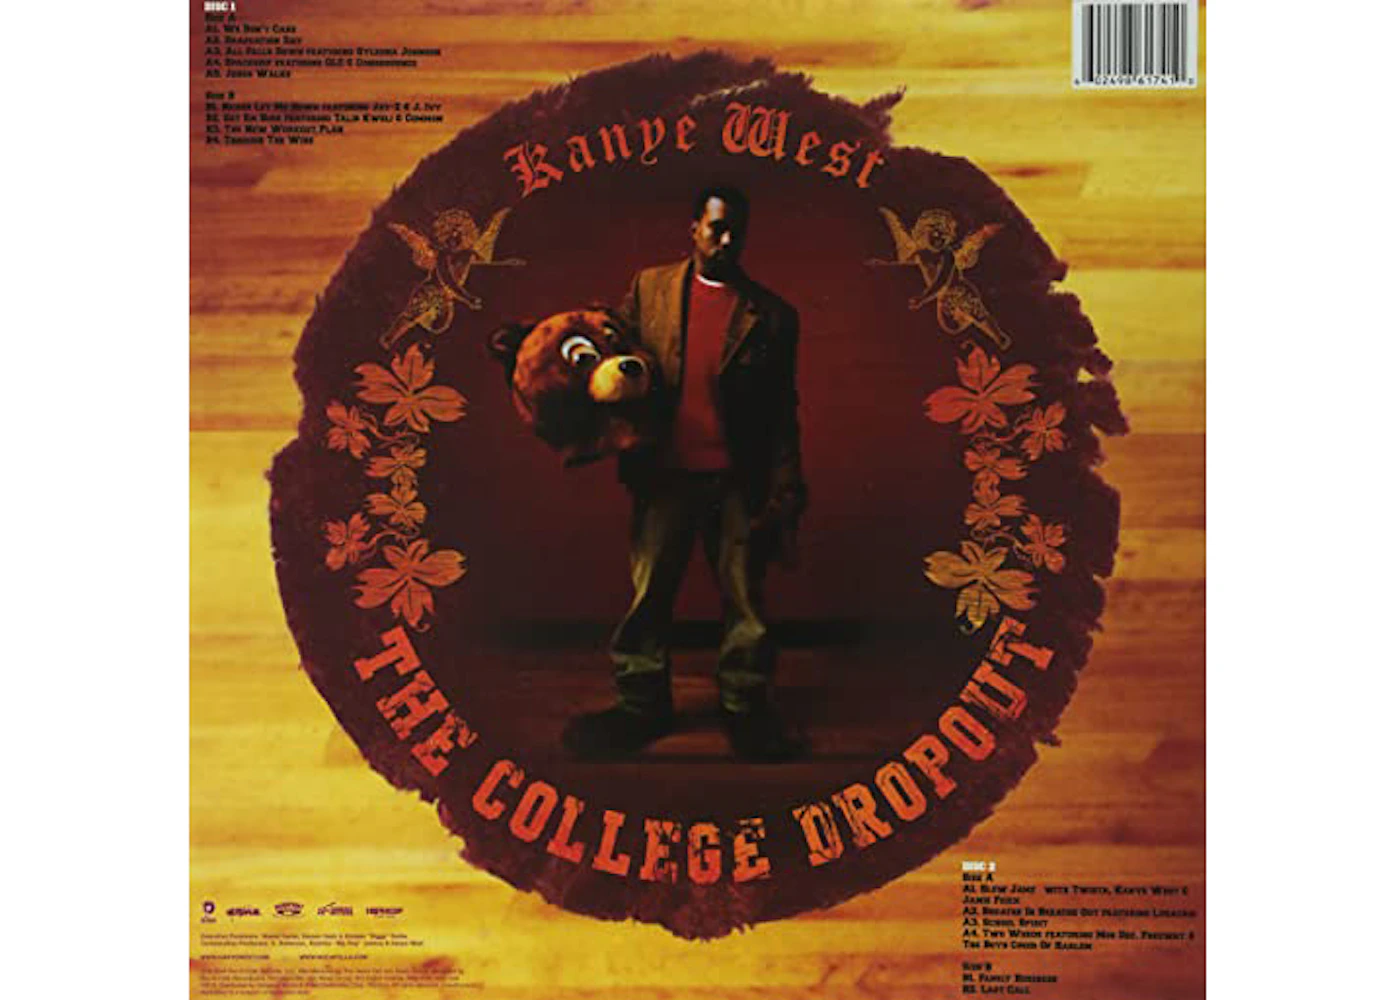 Kanye West The College Dropout 12 Vinyl - IT